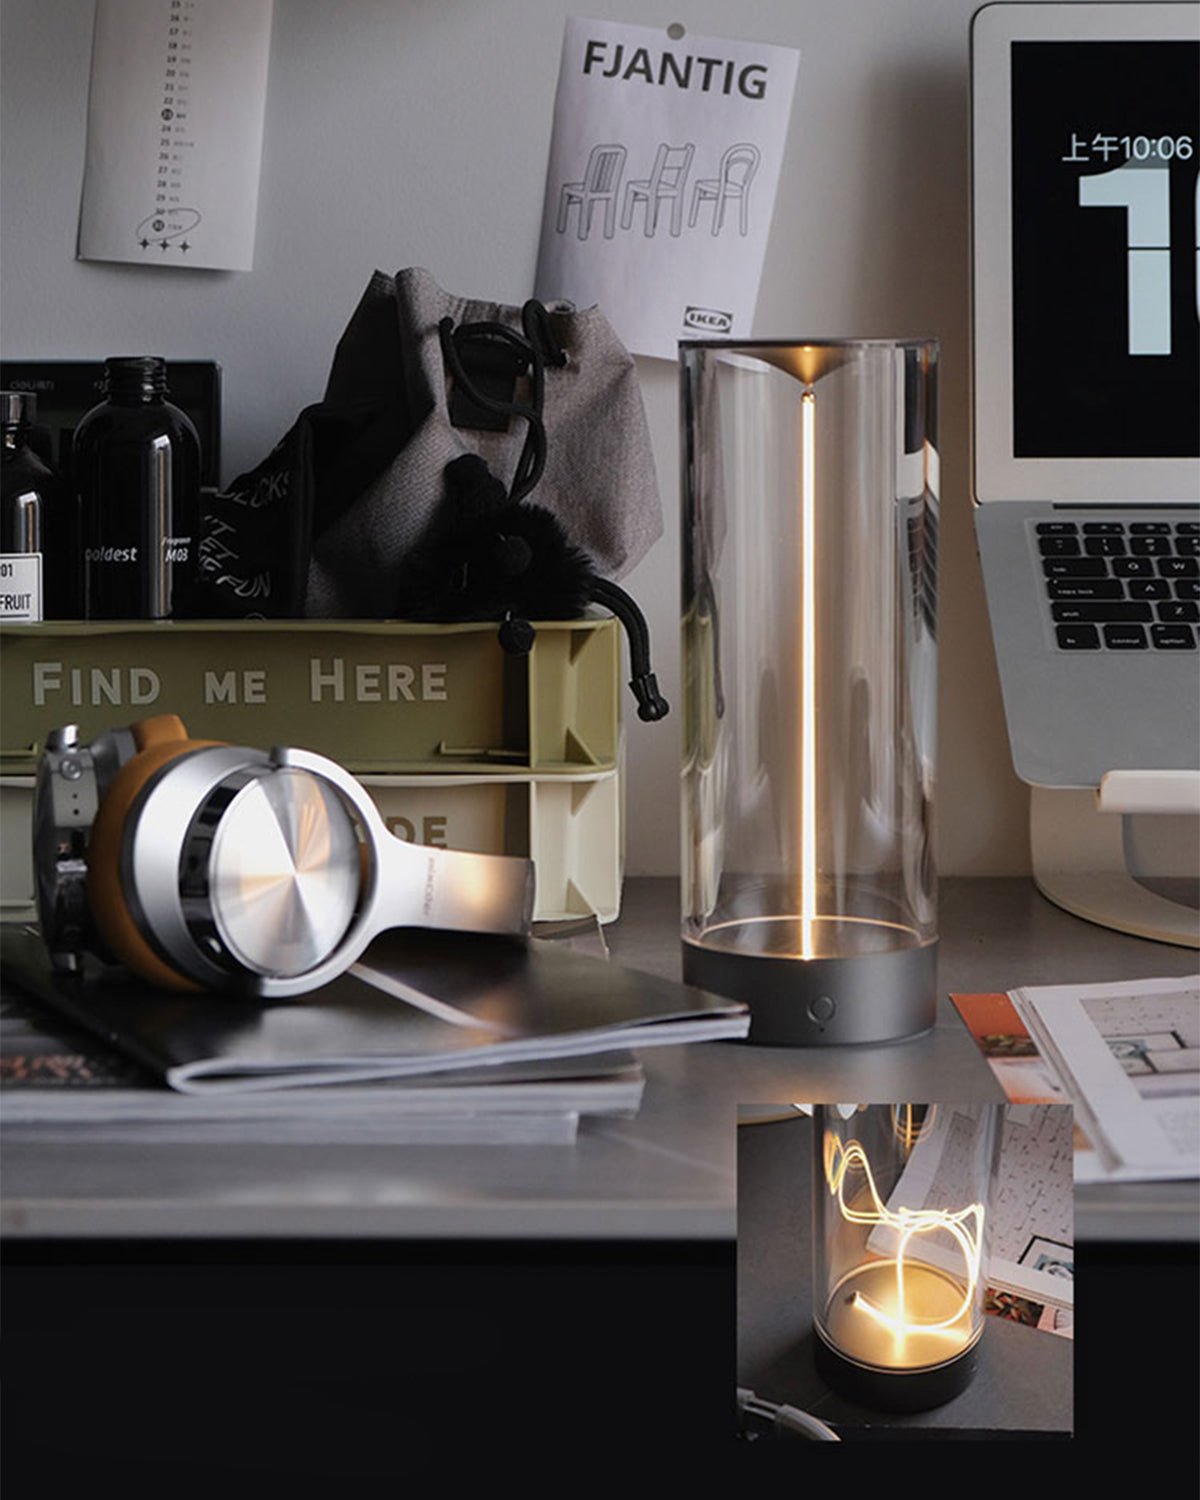 Fila Night Desk Lamp with Modern Design